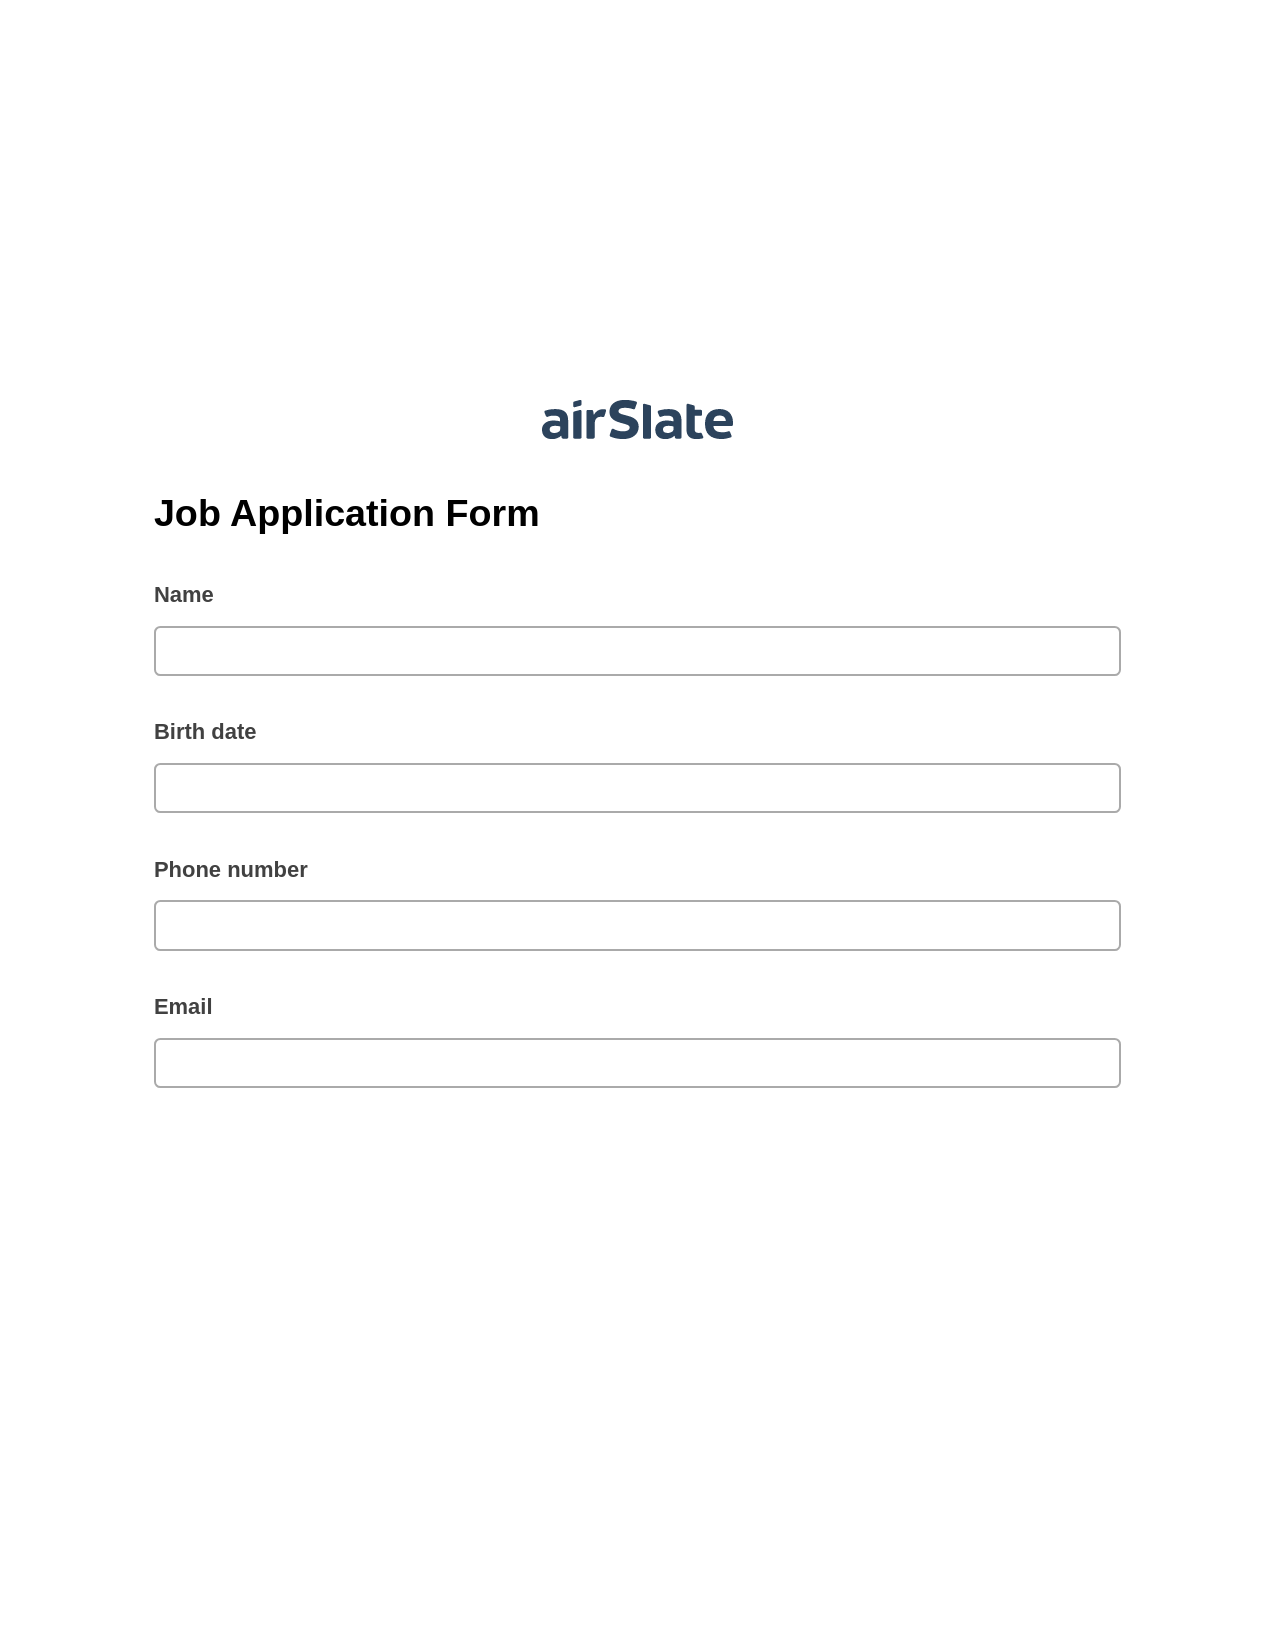 Multirole Job Application Form Pre-fill from MySQL Bot, Create Salesforce Record Bot, Box Bot